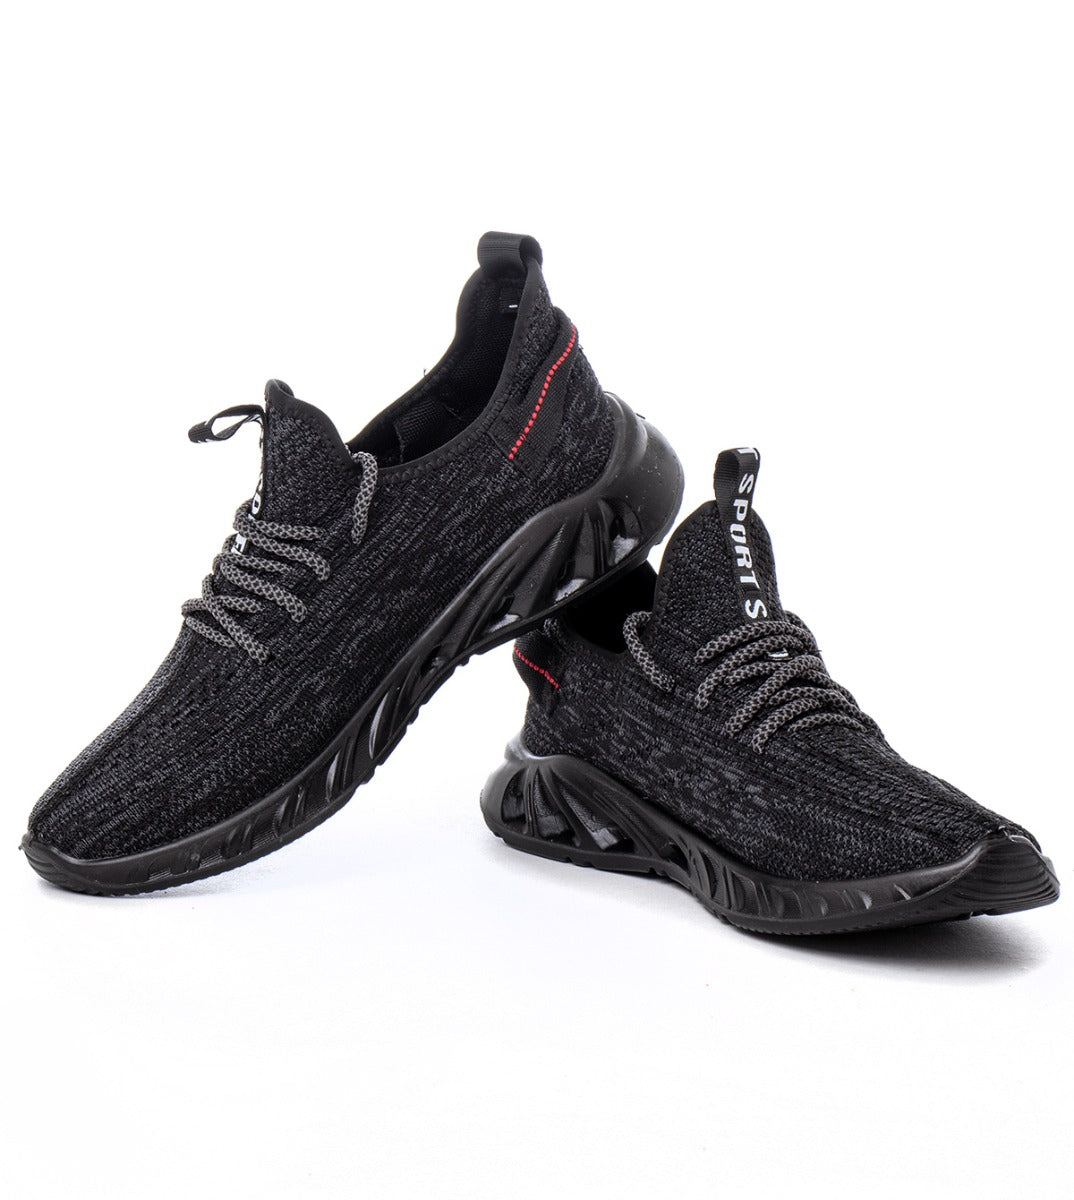 Scarpe Uomo Shoes Sneakers Sportiva Casual Nera GIOSAL-S1107A